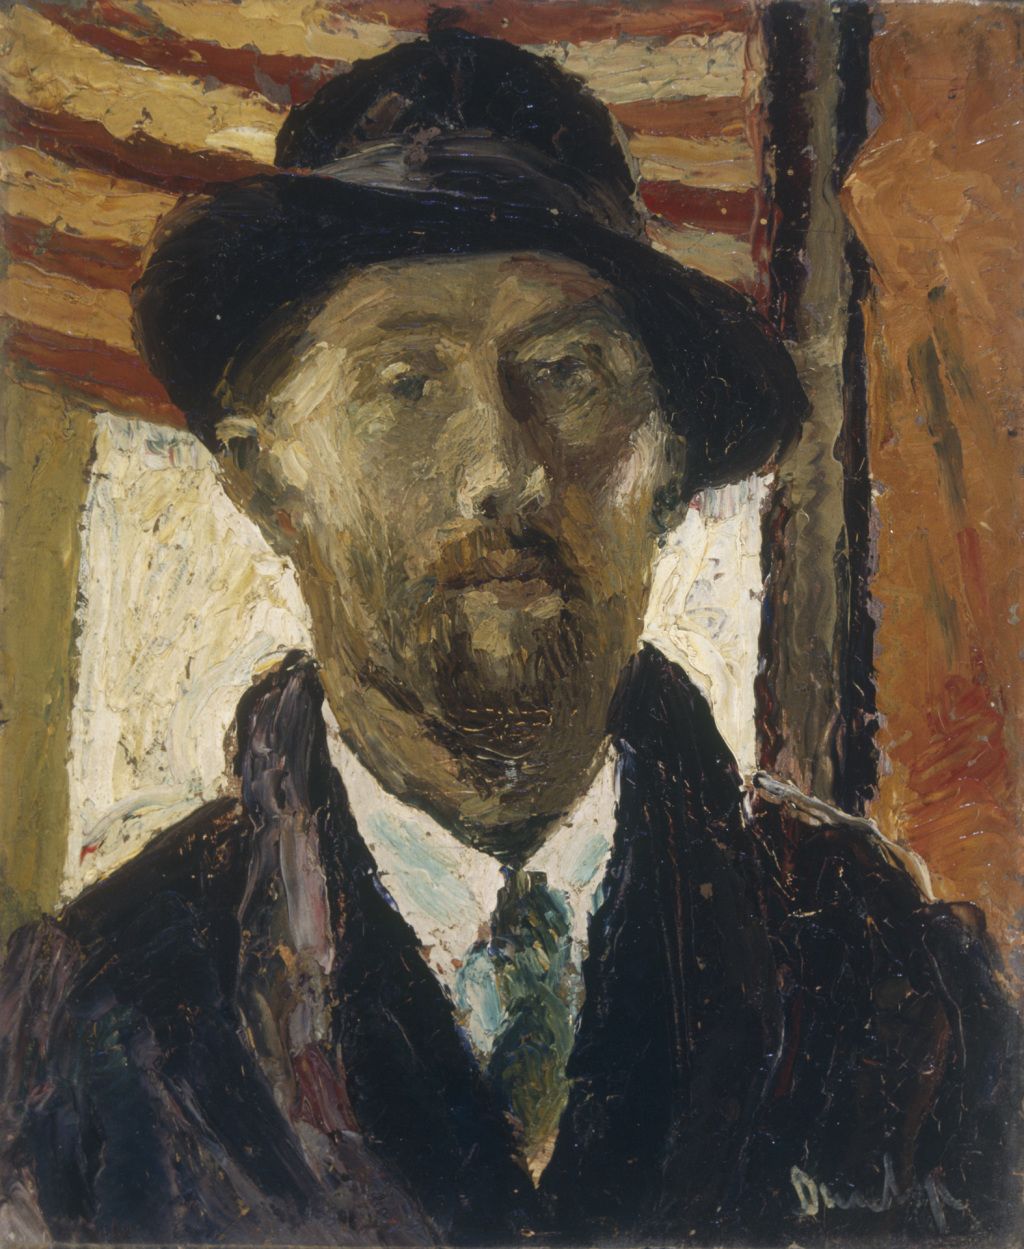 Portrait of a Man by Dunlop